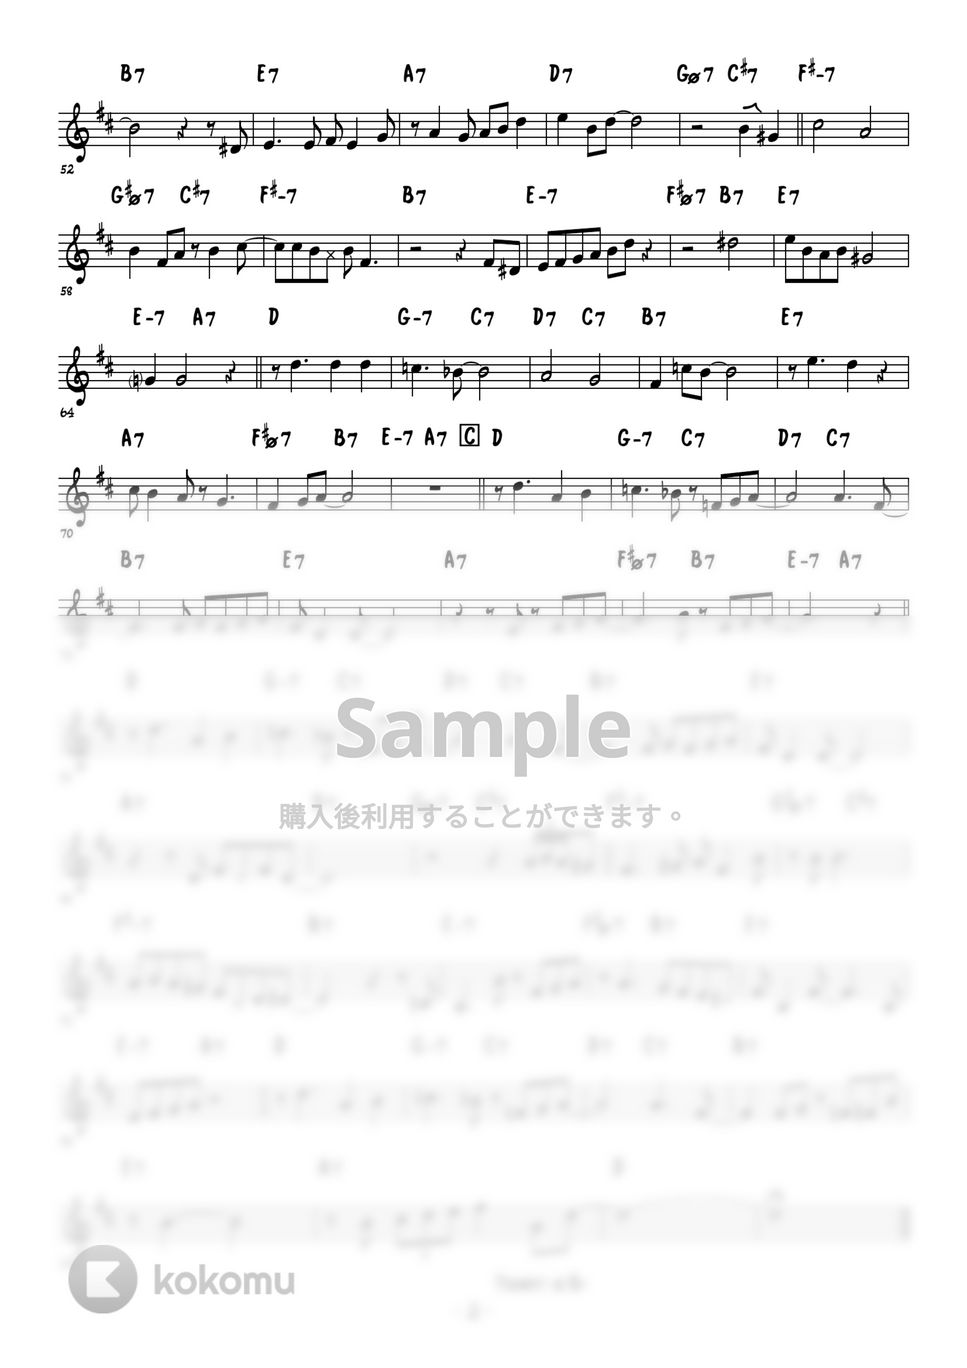 Charlie Paker - Yardbird Suite トランペット楽譜 (テーマ演奏例アドリブソロ例) by 高田将利